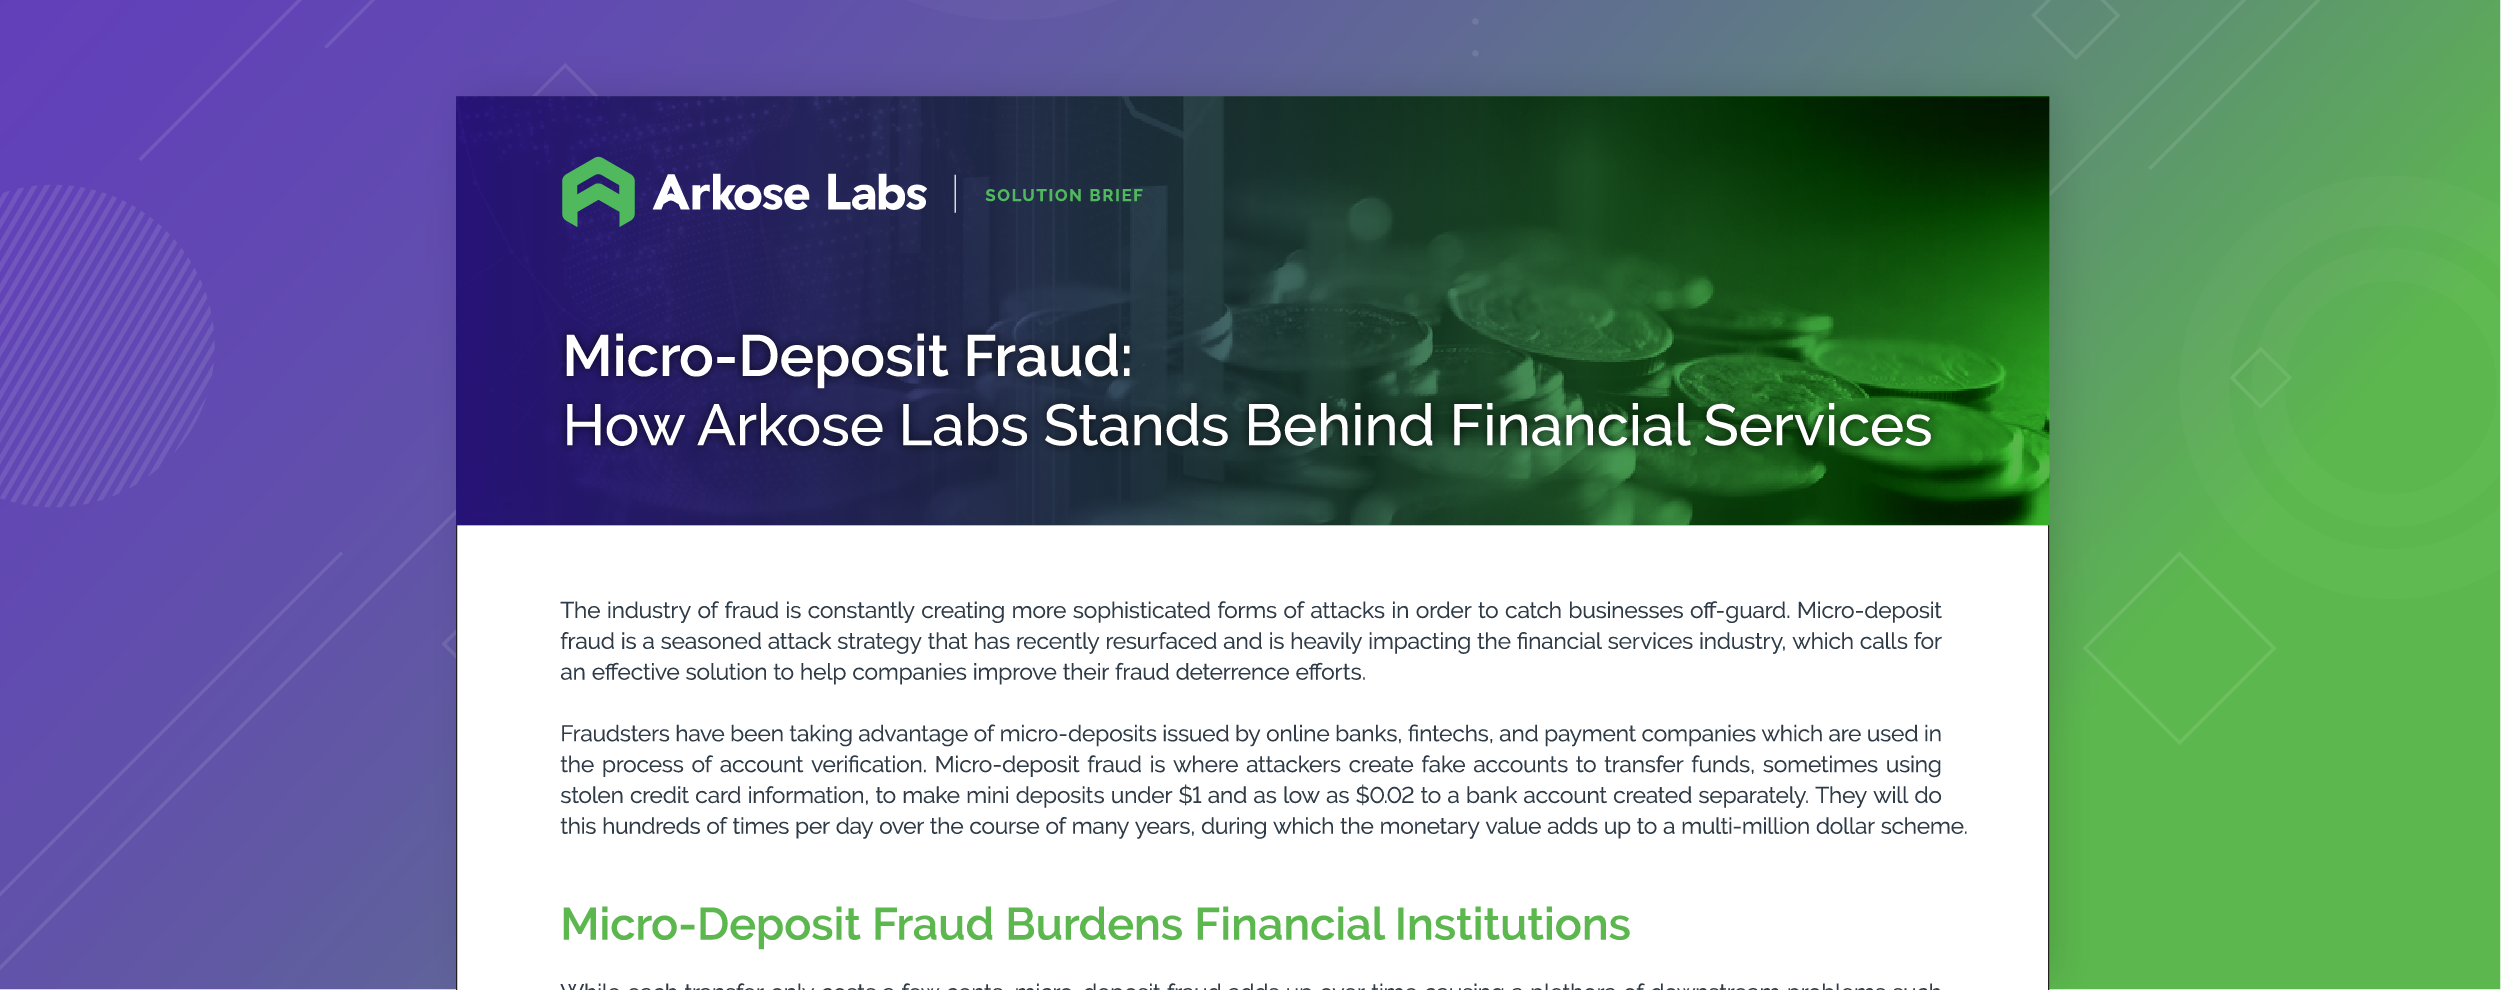 Micro-Deposit Fraud solution brief